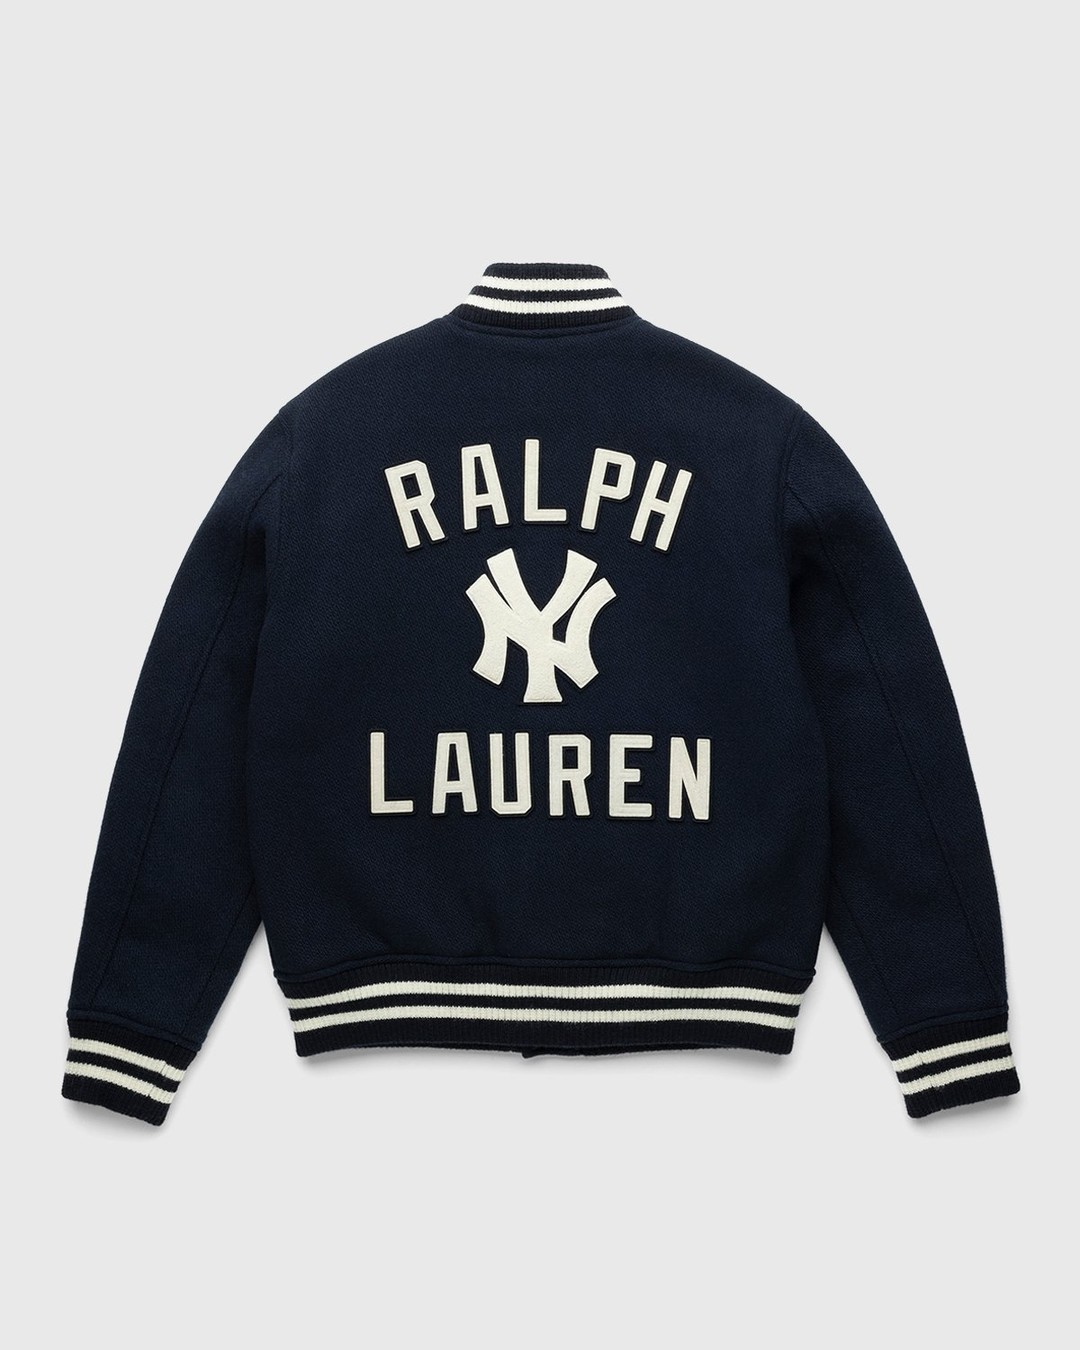 Films Jackets Polo Ralph Lauren NY Yankees MLB Black Jacket